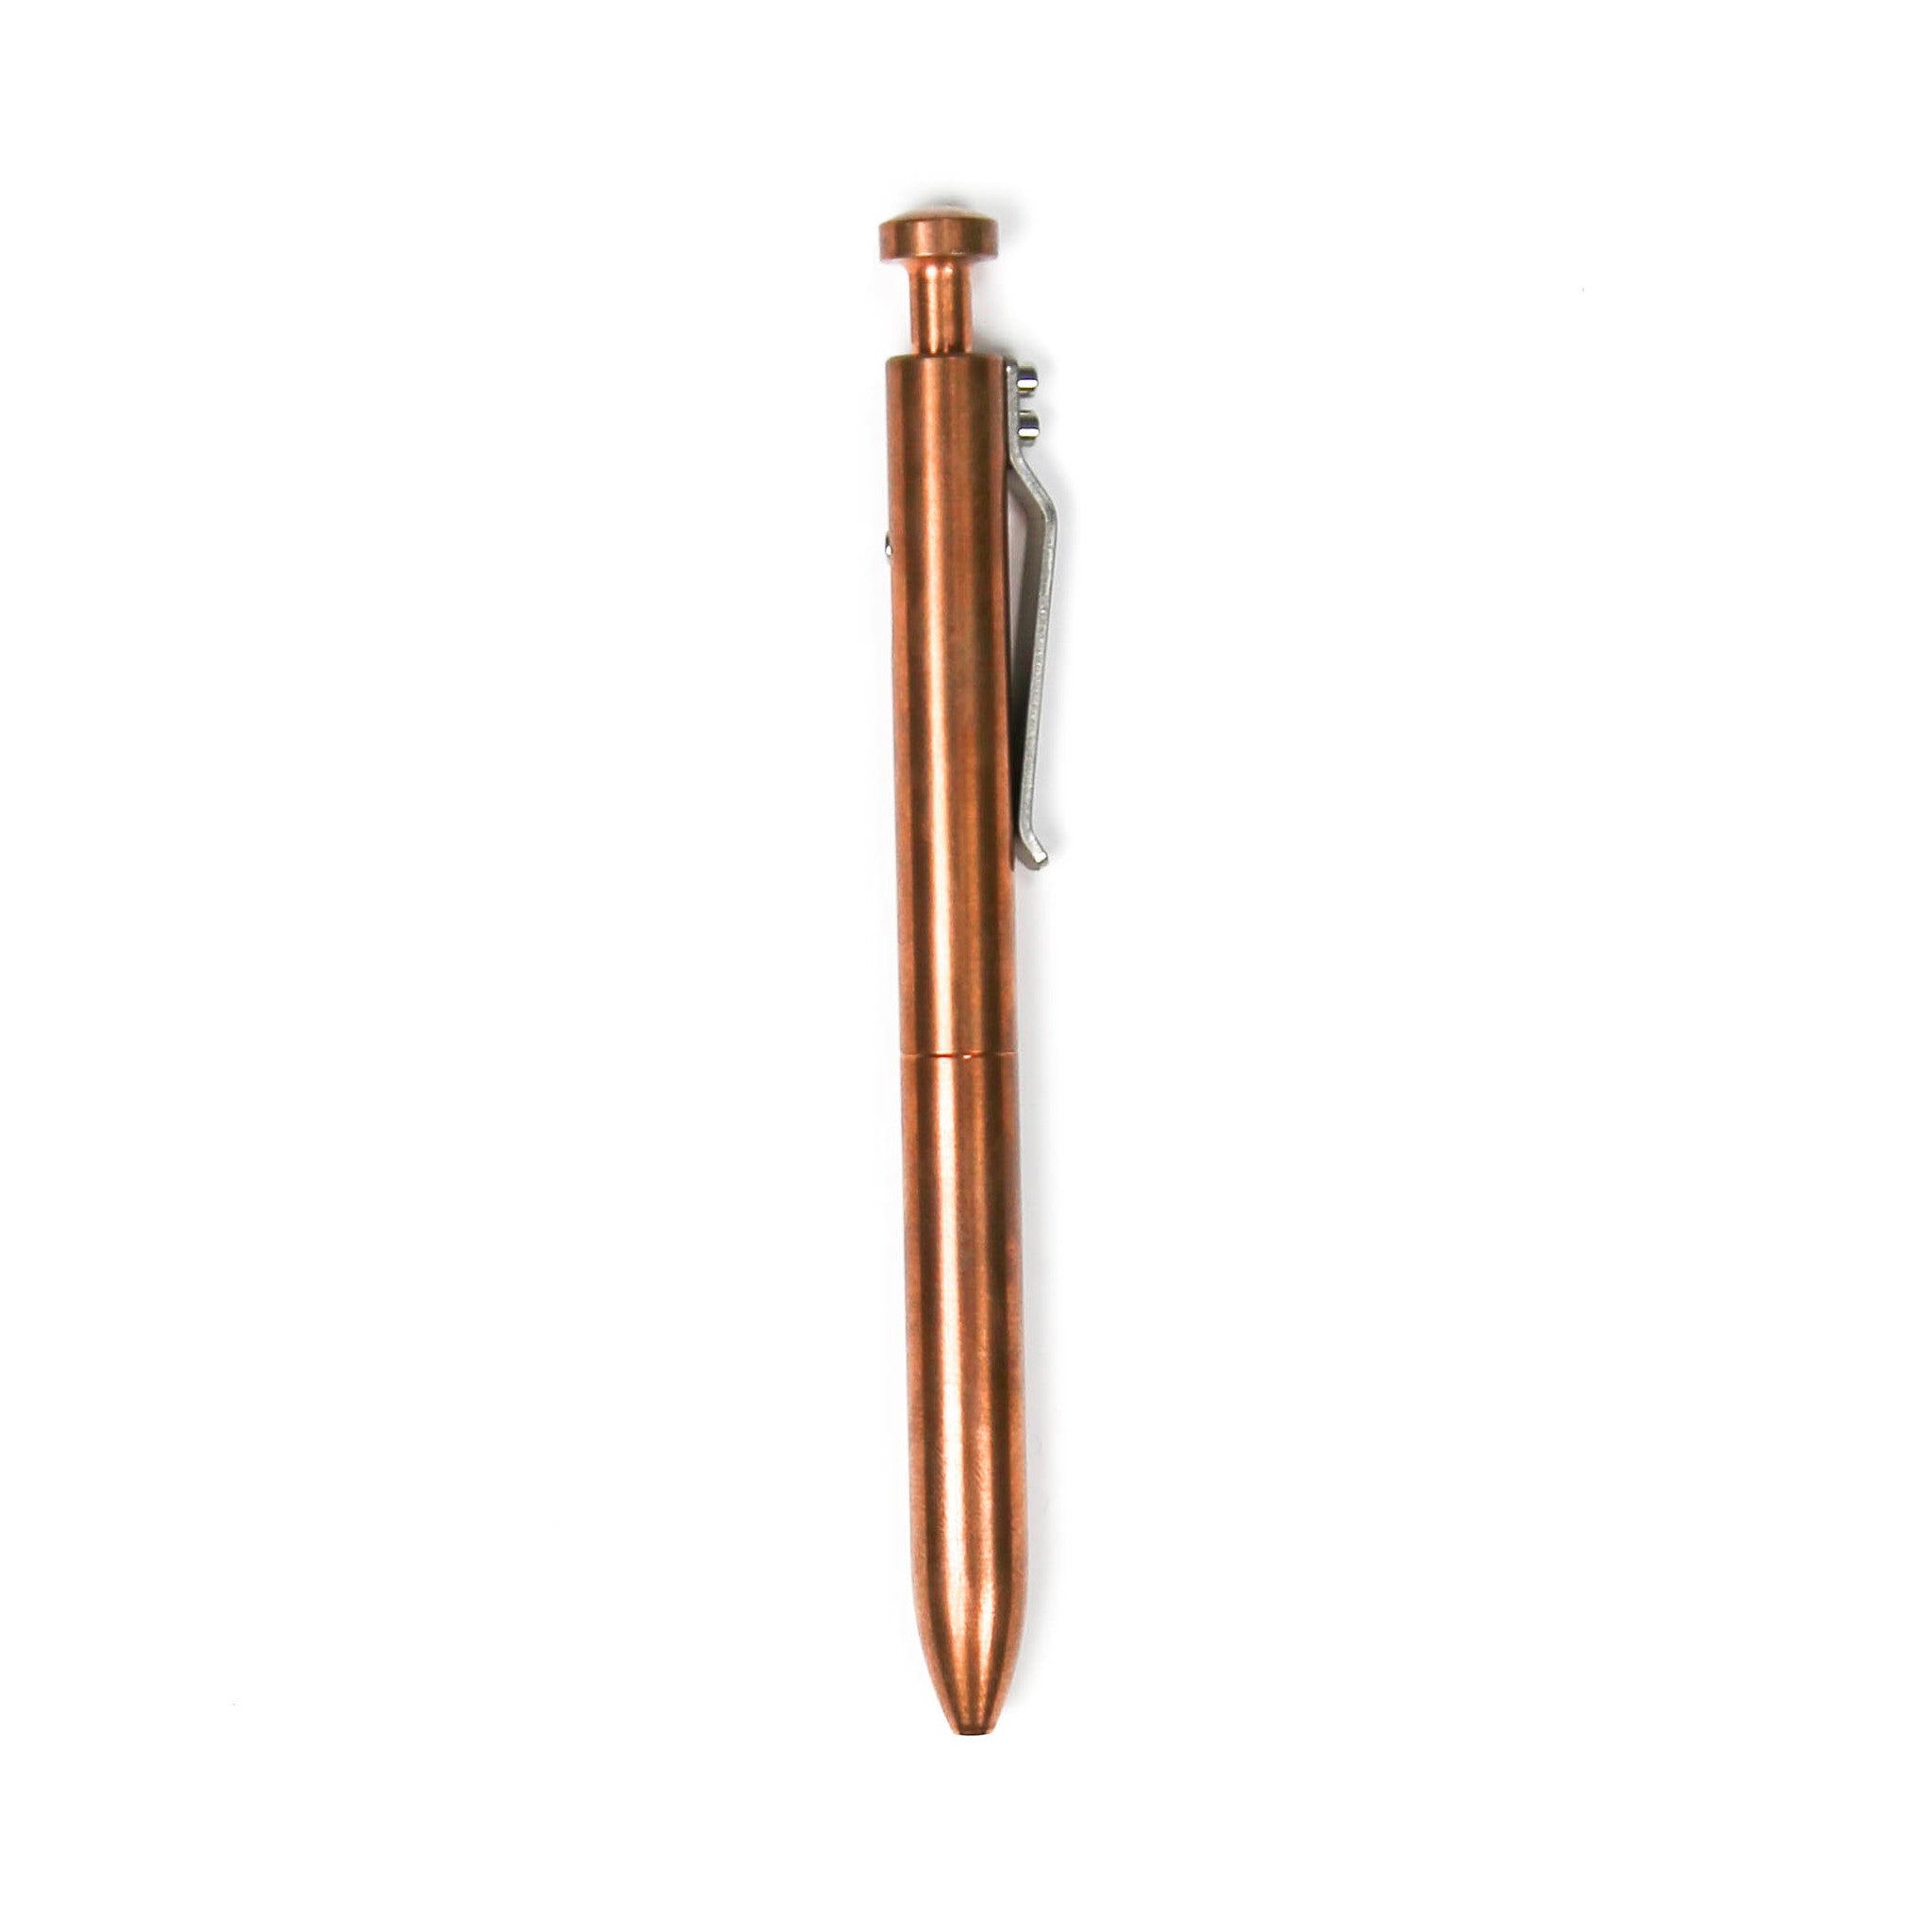 The Bolt Pen - Copper